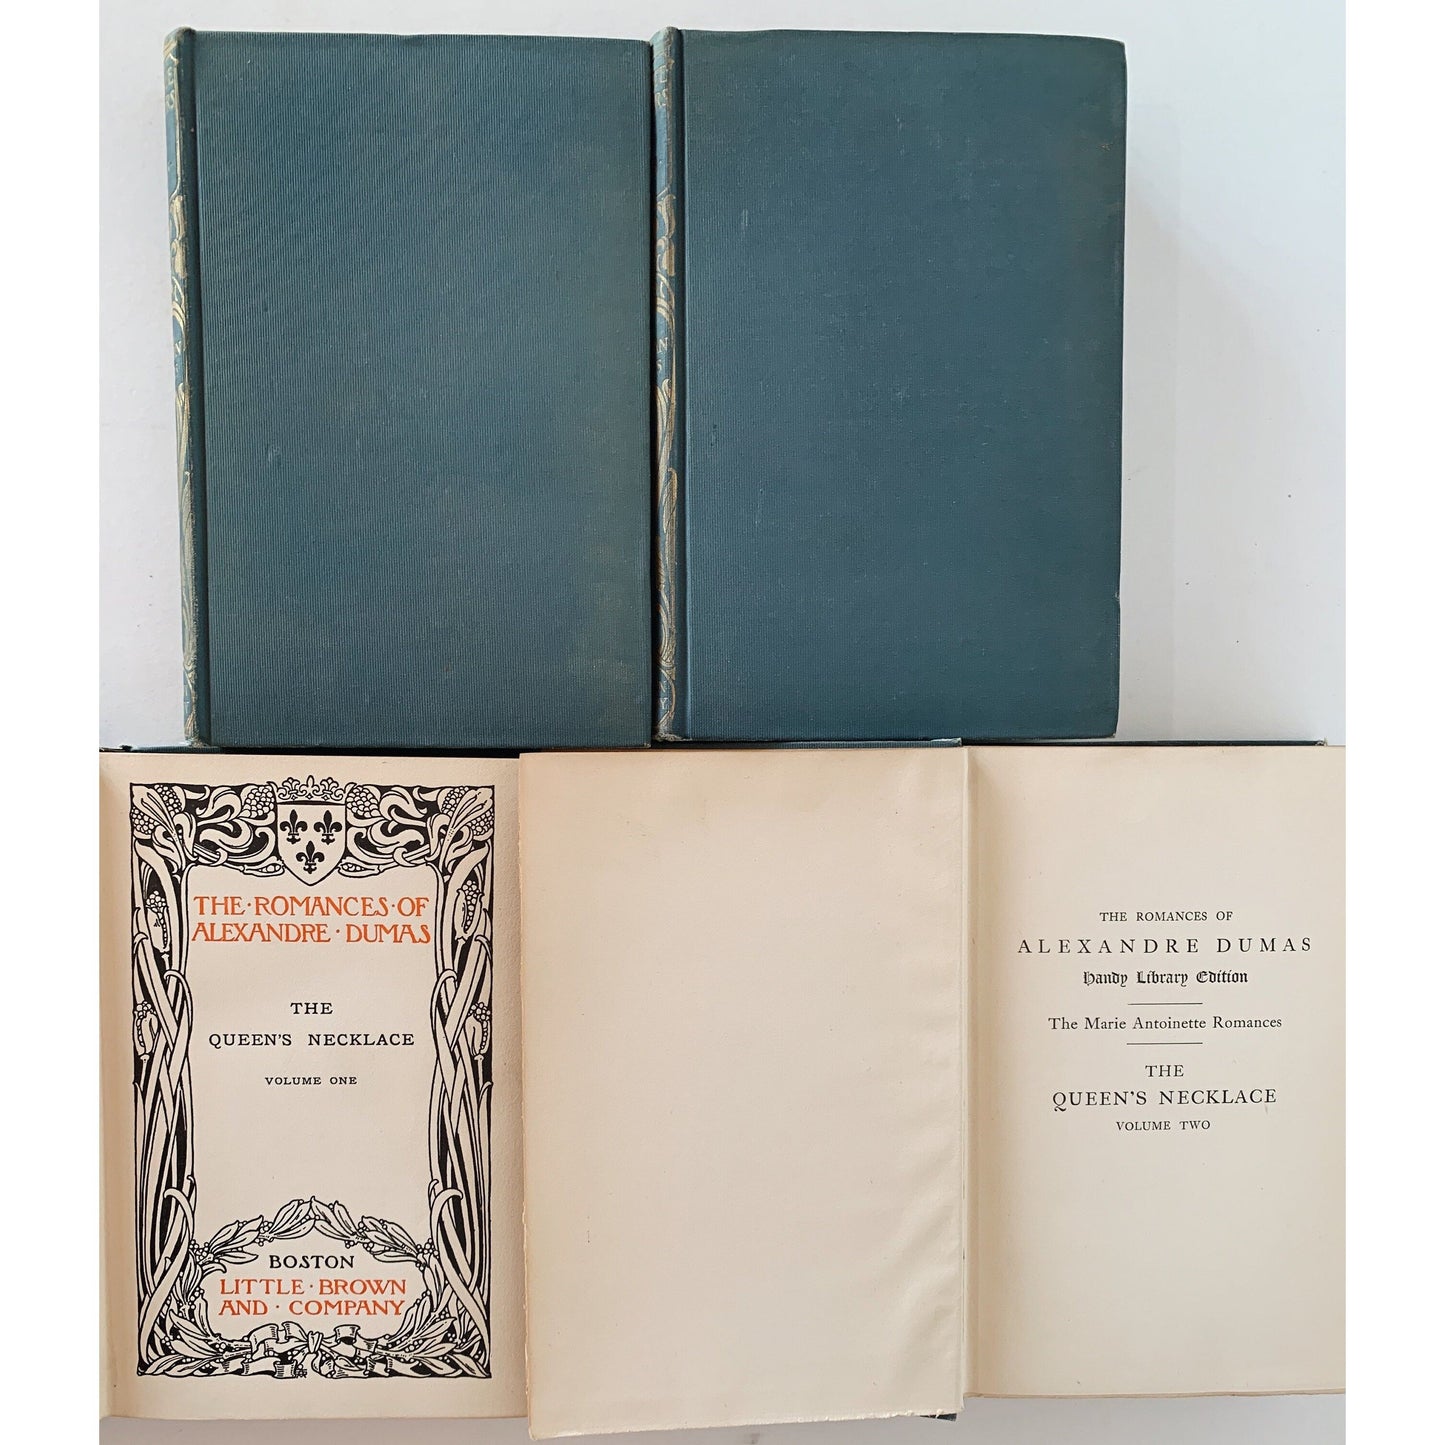 Antique Blue Alexandre Dumas Set, The Romances of Alexandre Dumas, Handy Library Edition